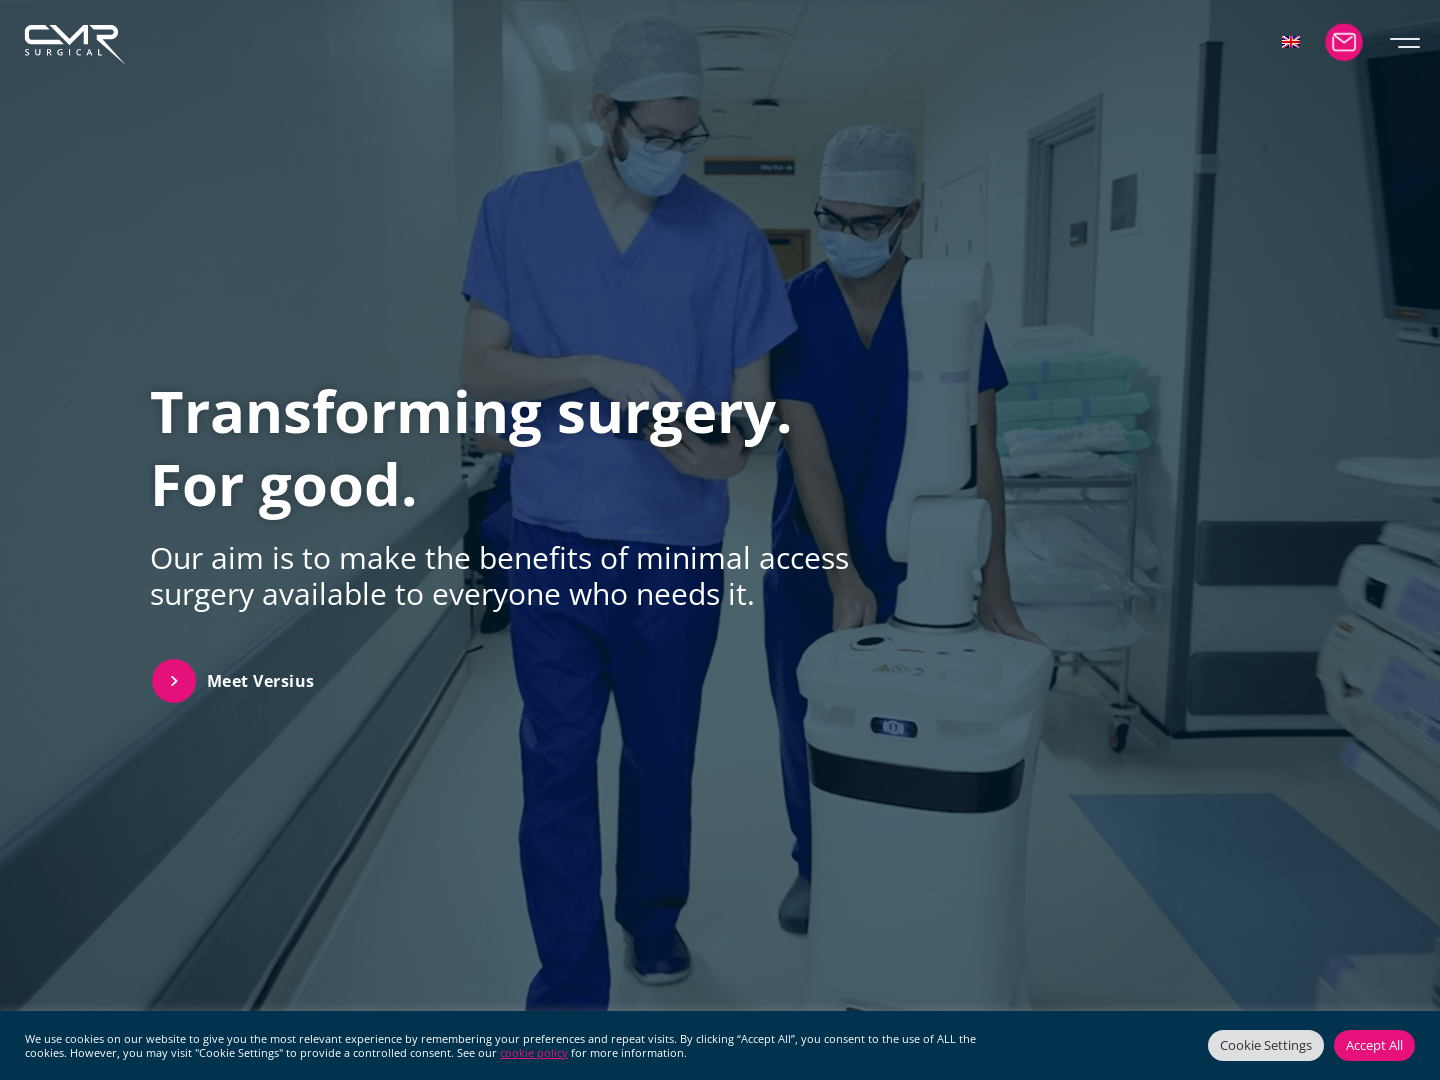 CMR Surgical Raises $165M for Surgical Robotics Innovation